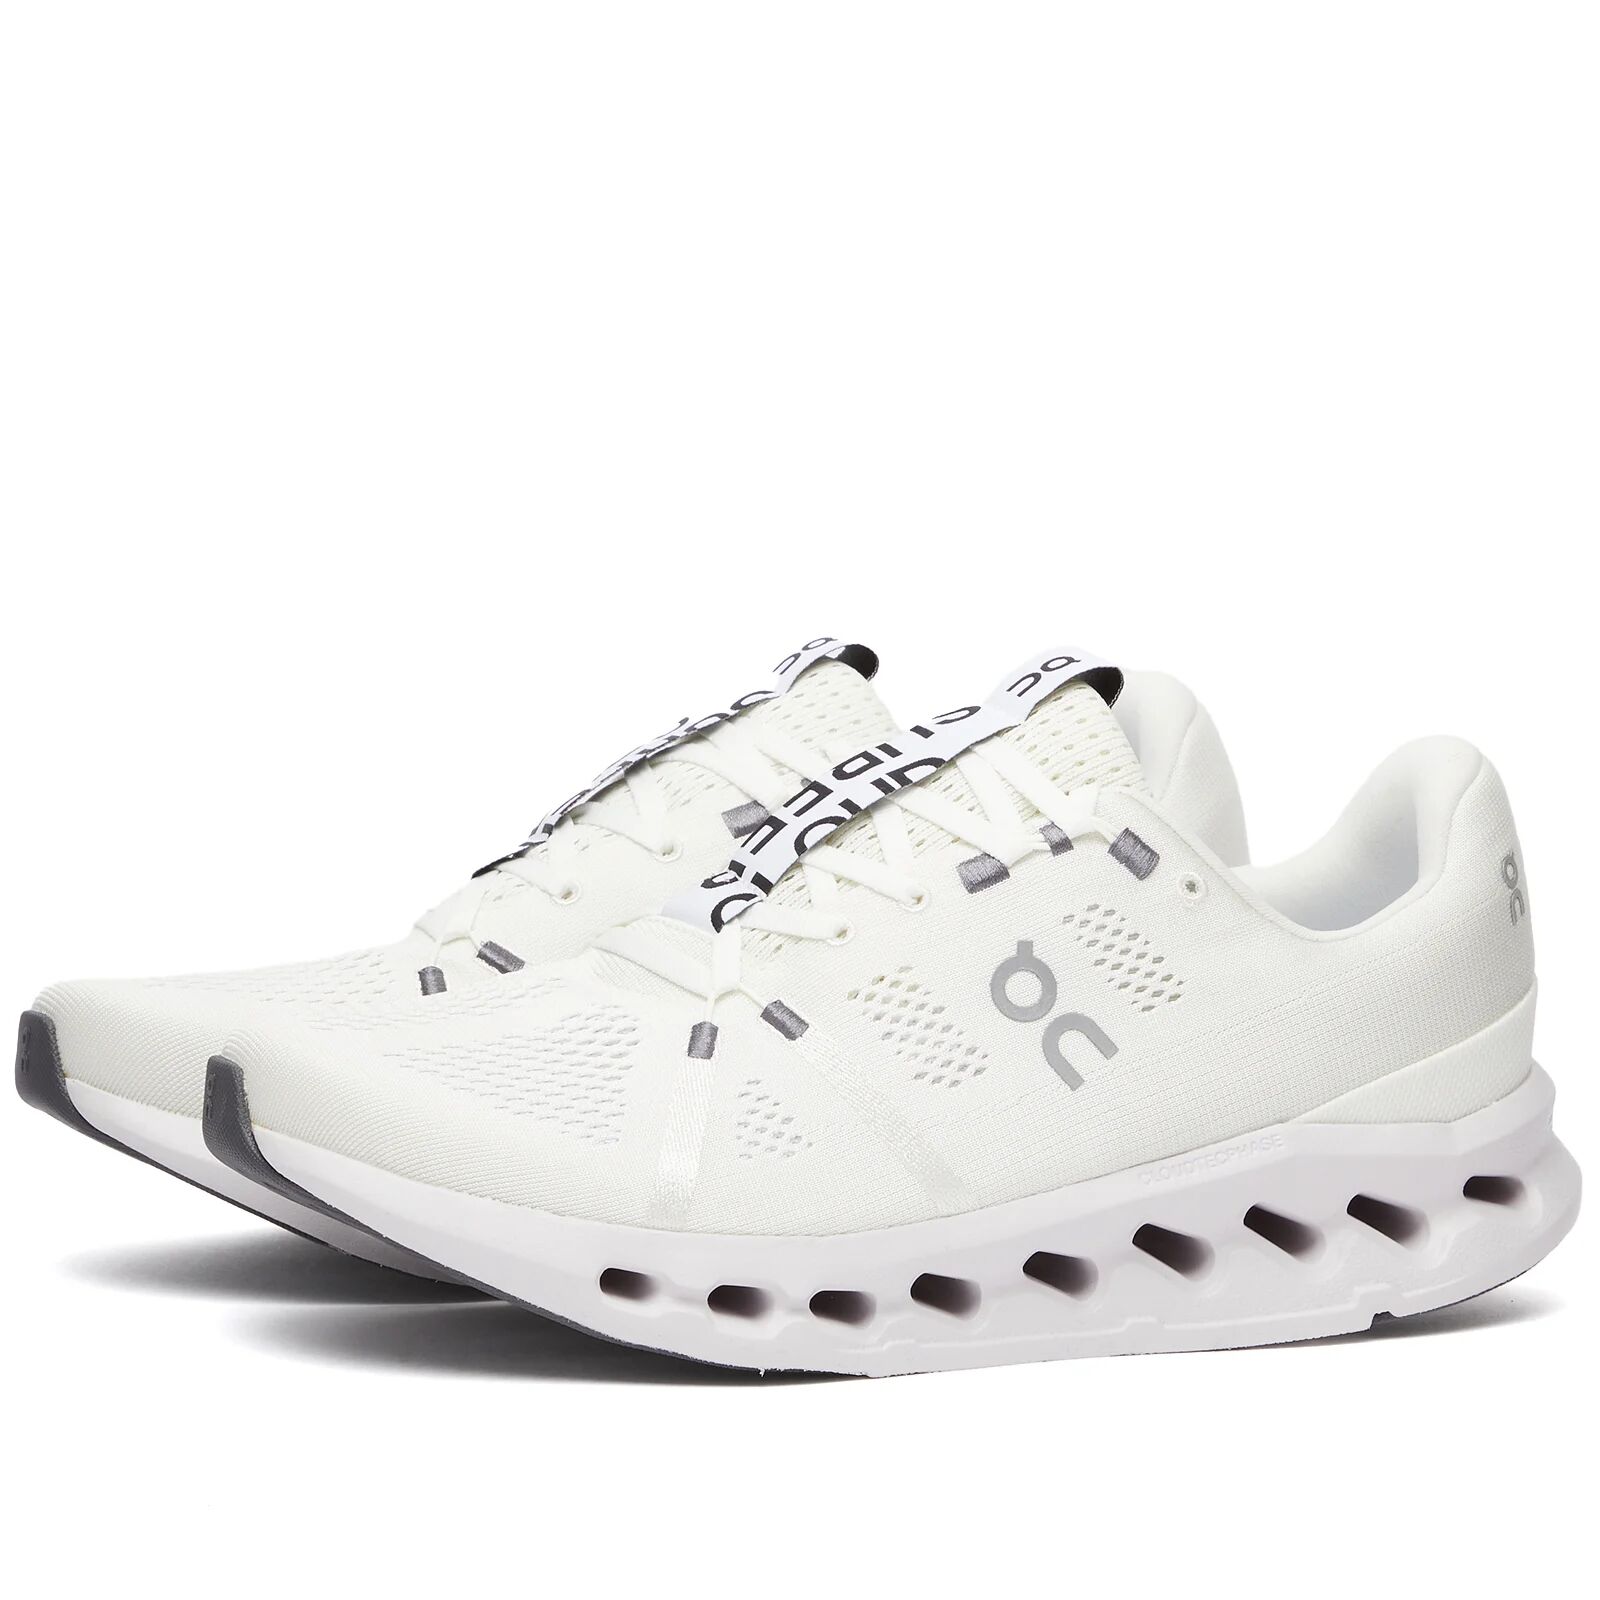 ON Men's Cloudsurfer Sneakers in White, Size UK 7